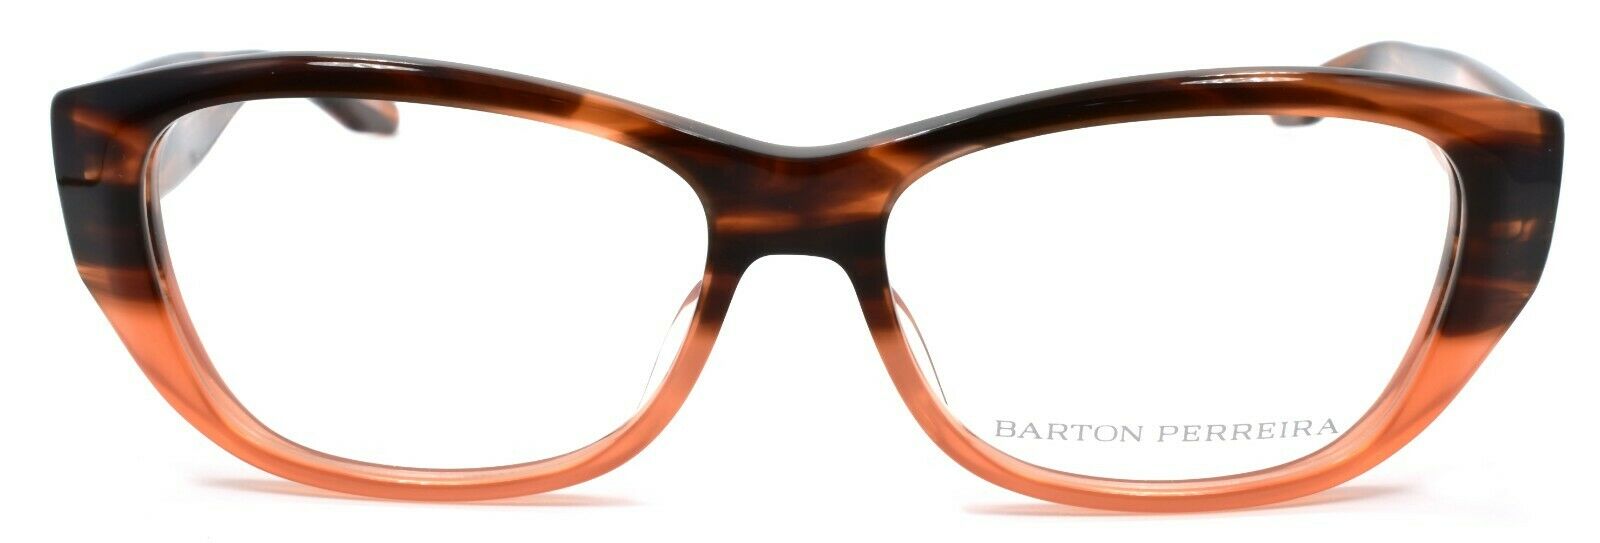 2-Barton Perreira Sexton ARG Women's Glasses Frames 54-15-138 Amber Rose Gradient-672263039389-IKSpecs